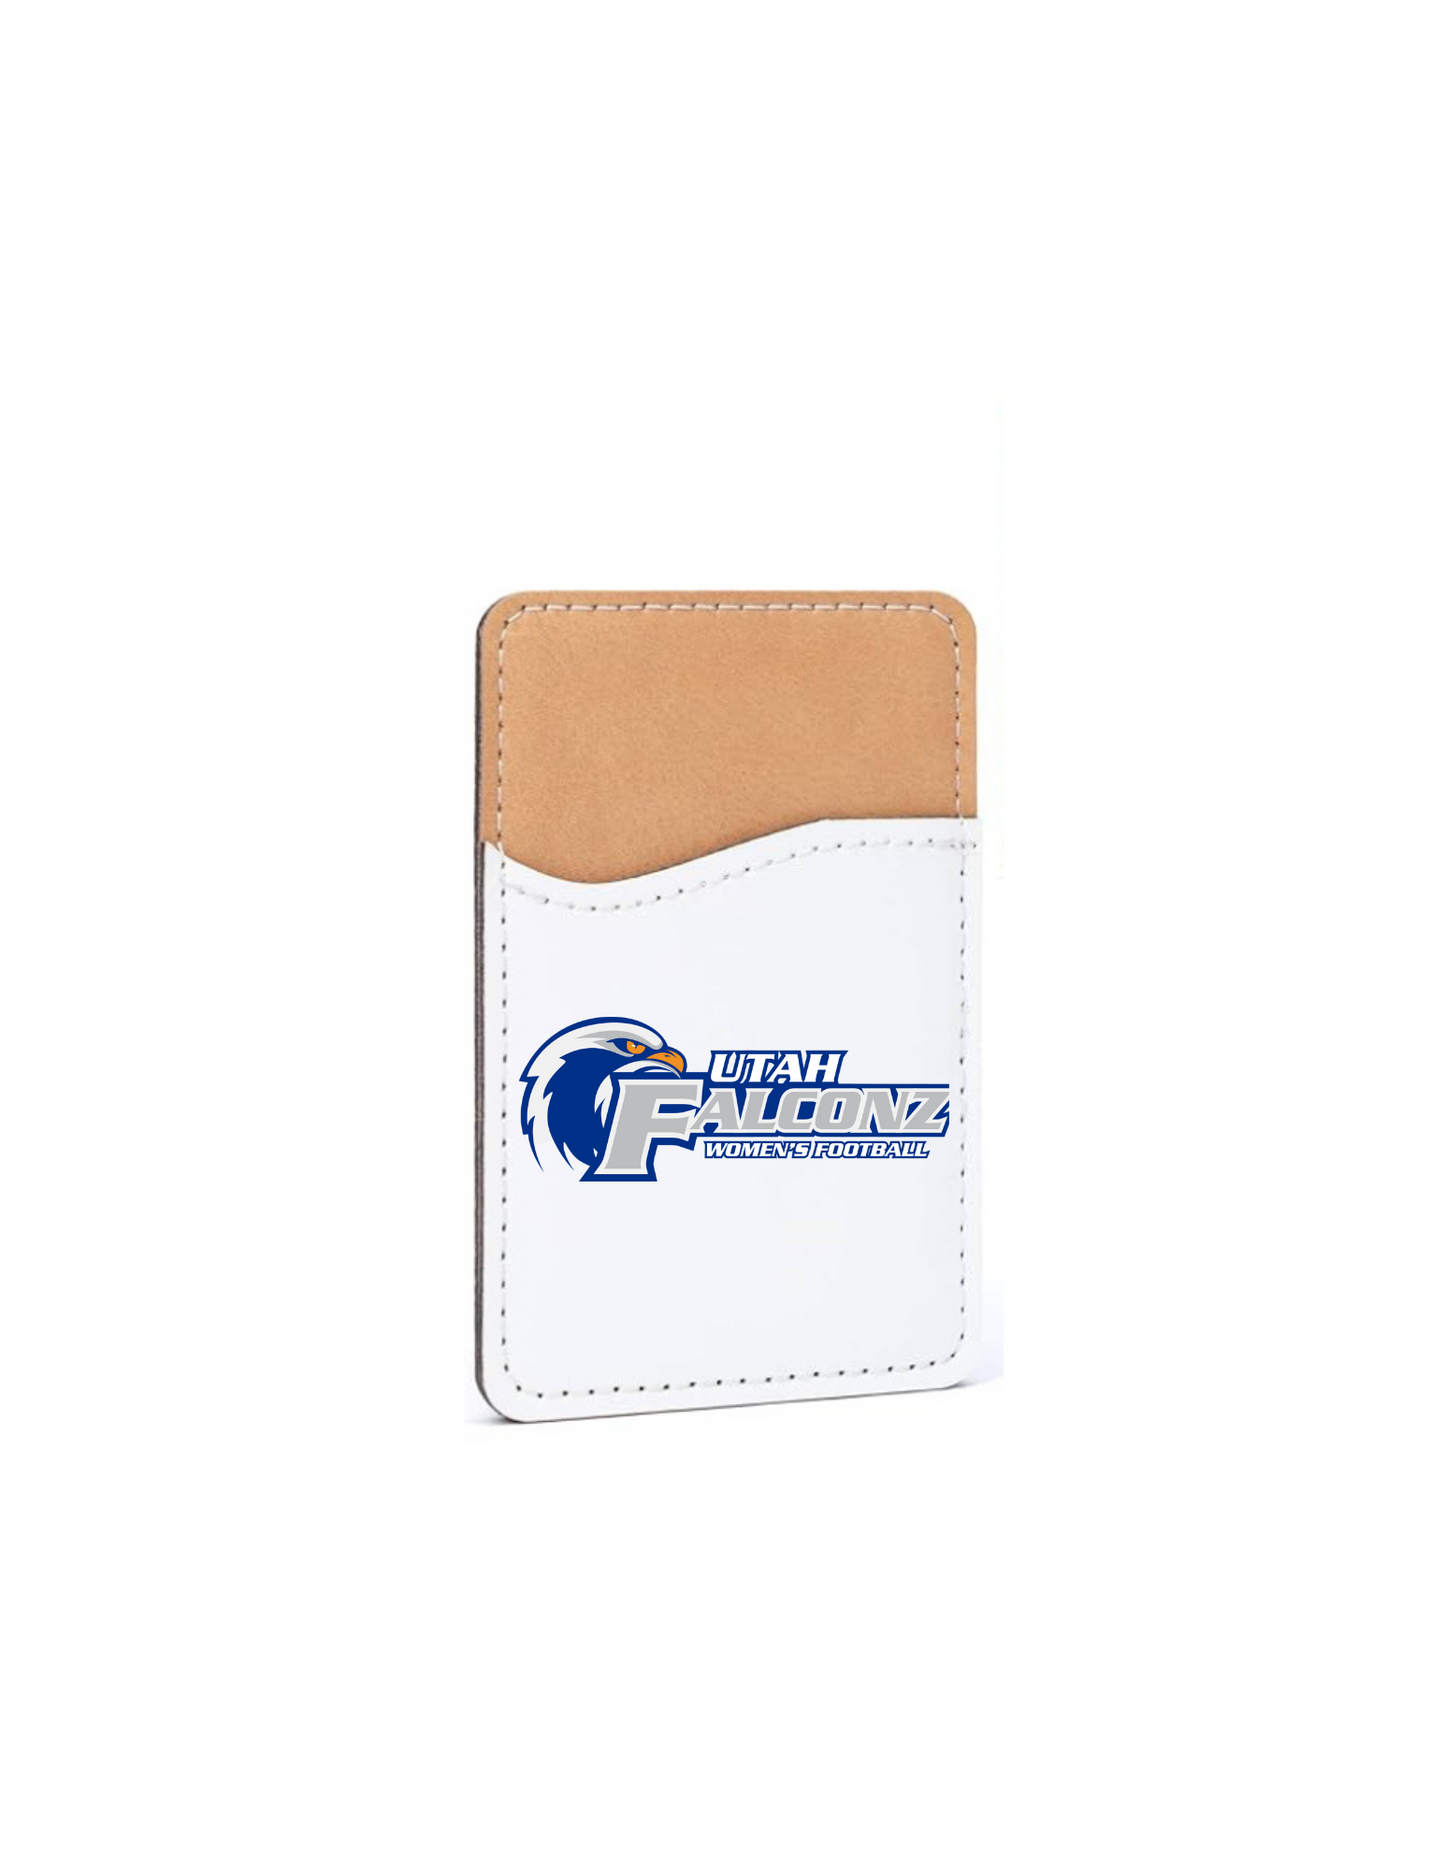 Utah Falconz Leather Card Holder